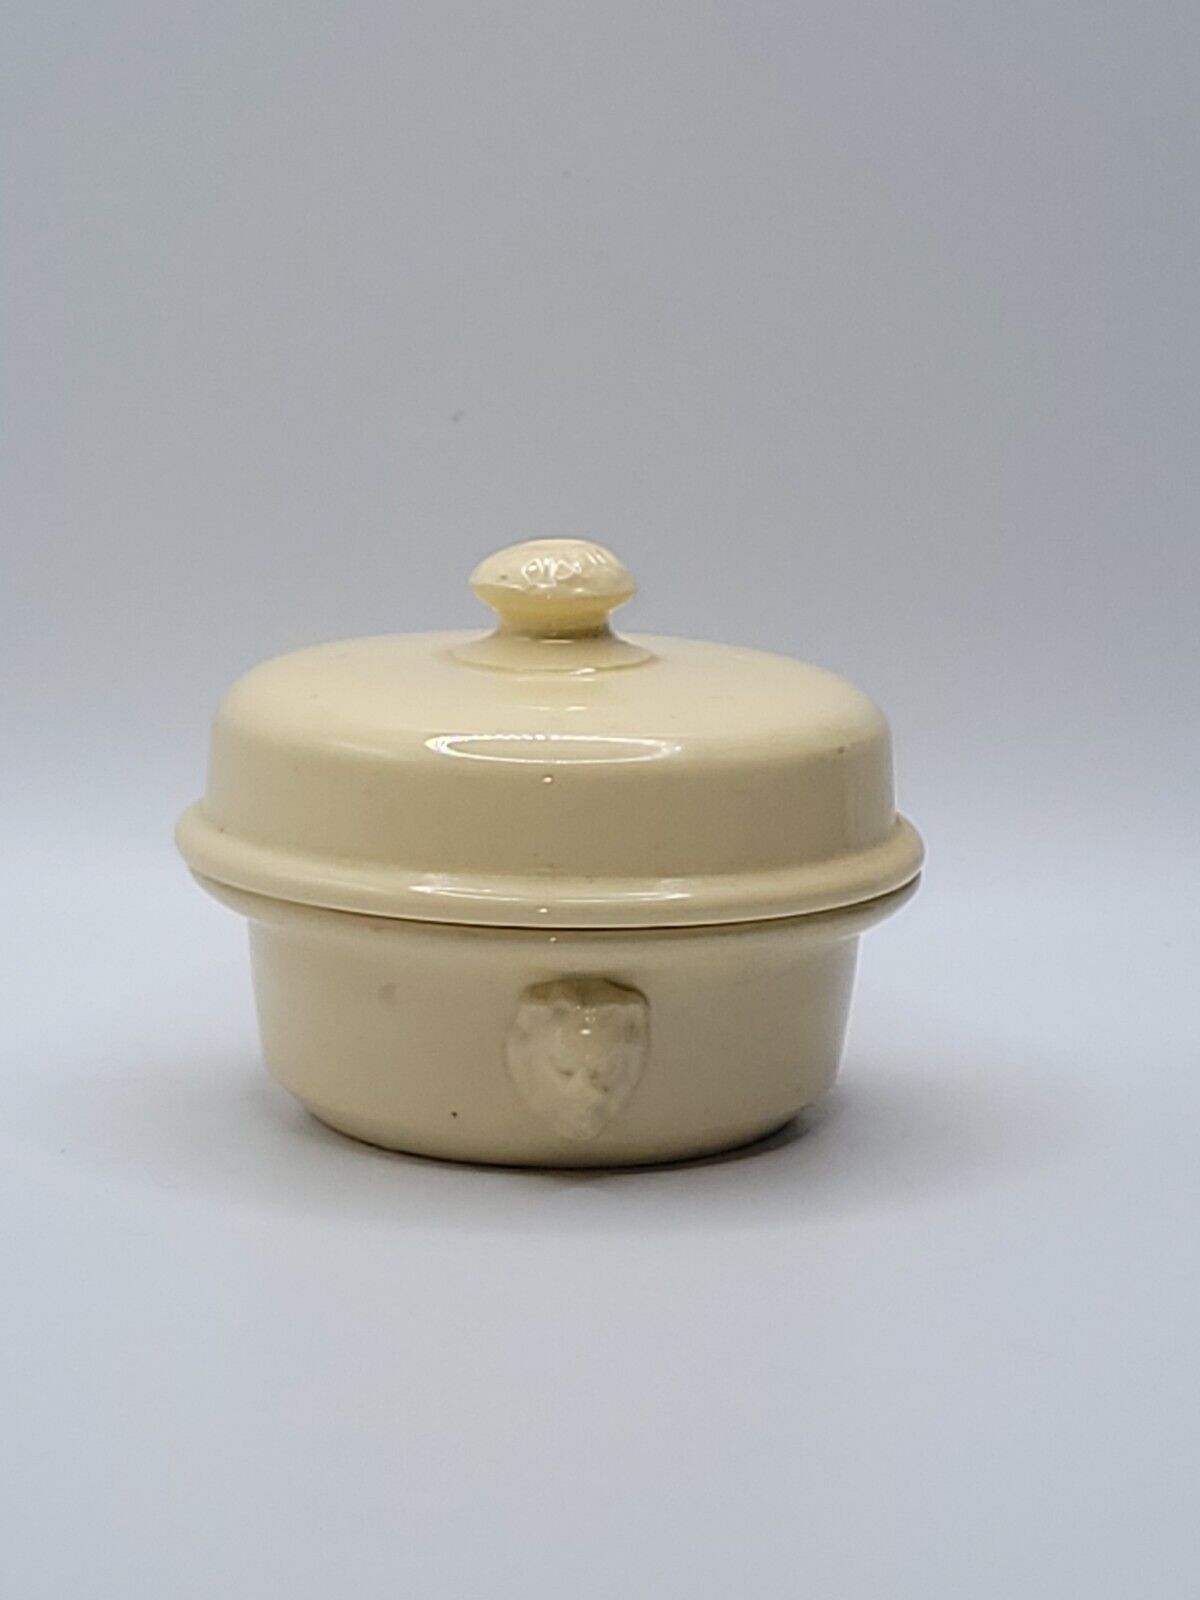 Antique 1920s French Pate Pot Terrine Brevetee Le Cachet Lidded Pot #12